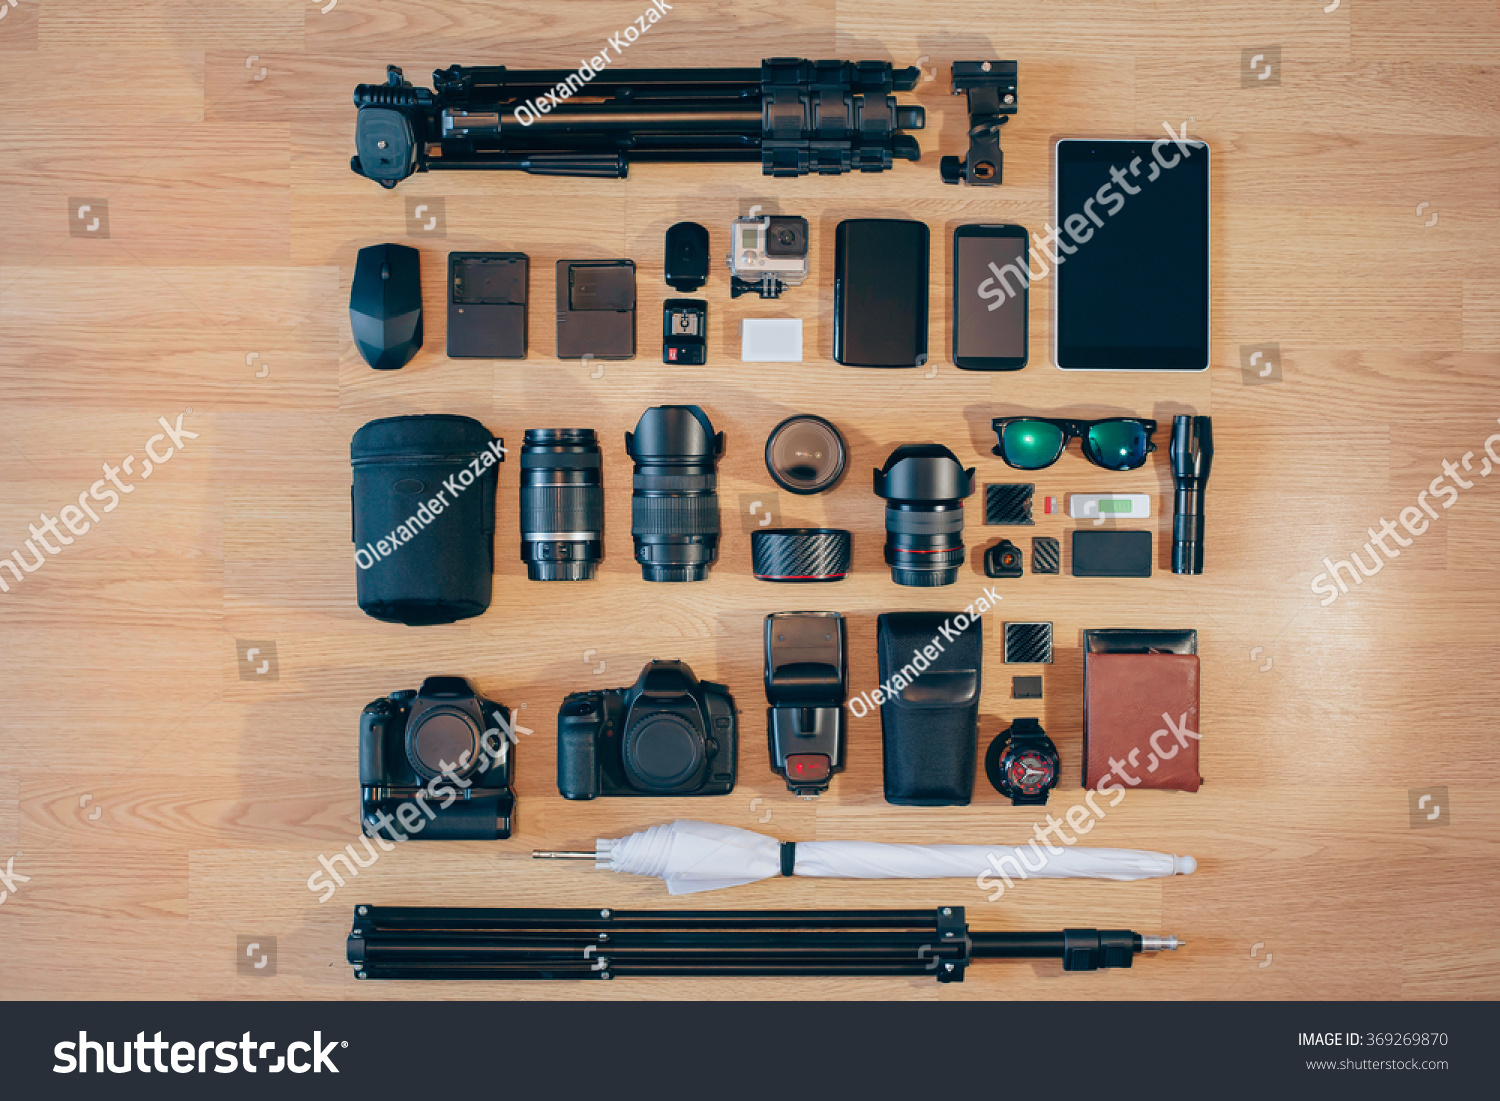 Professional photo camera kit is neatly folded on wood surface #369269870